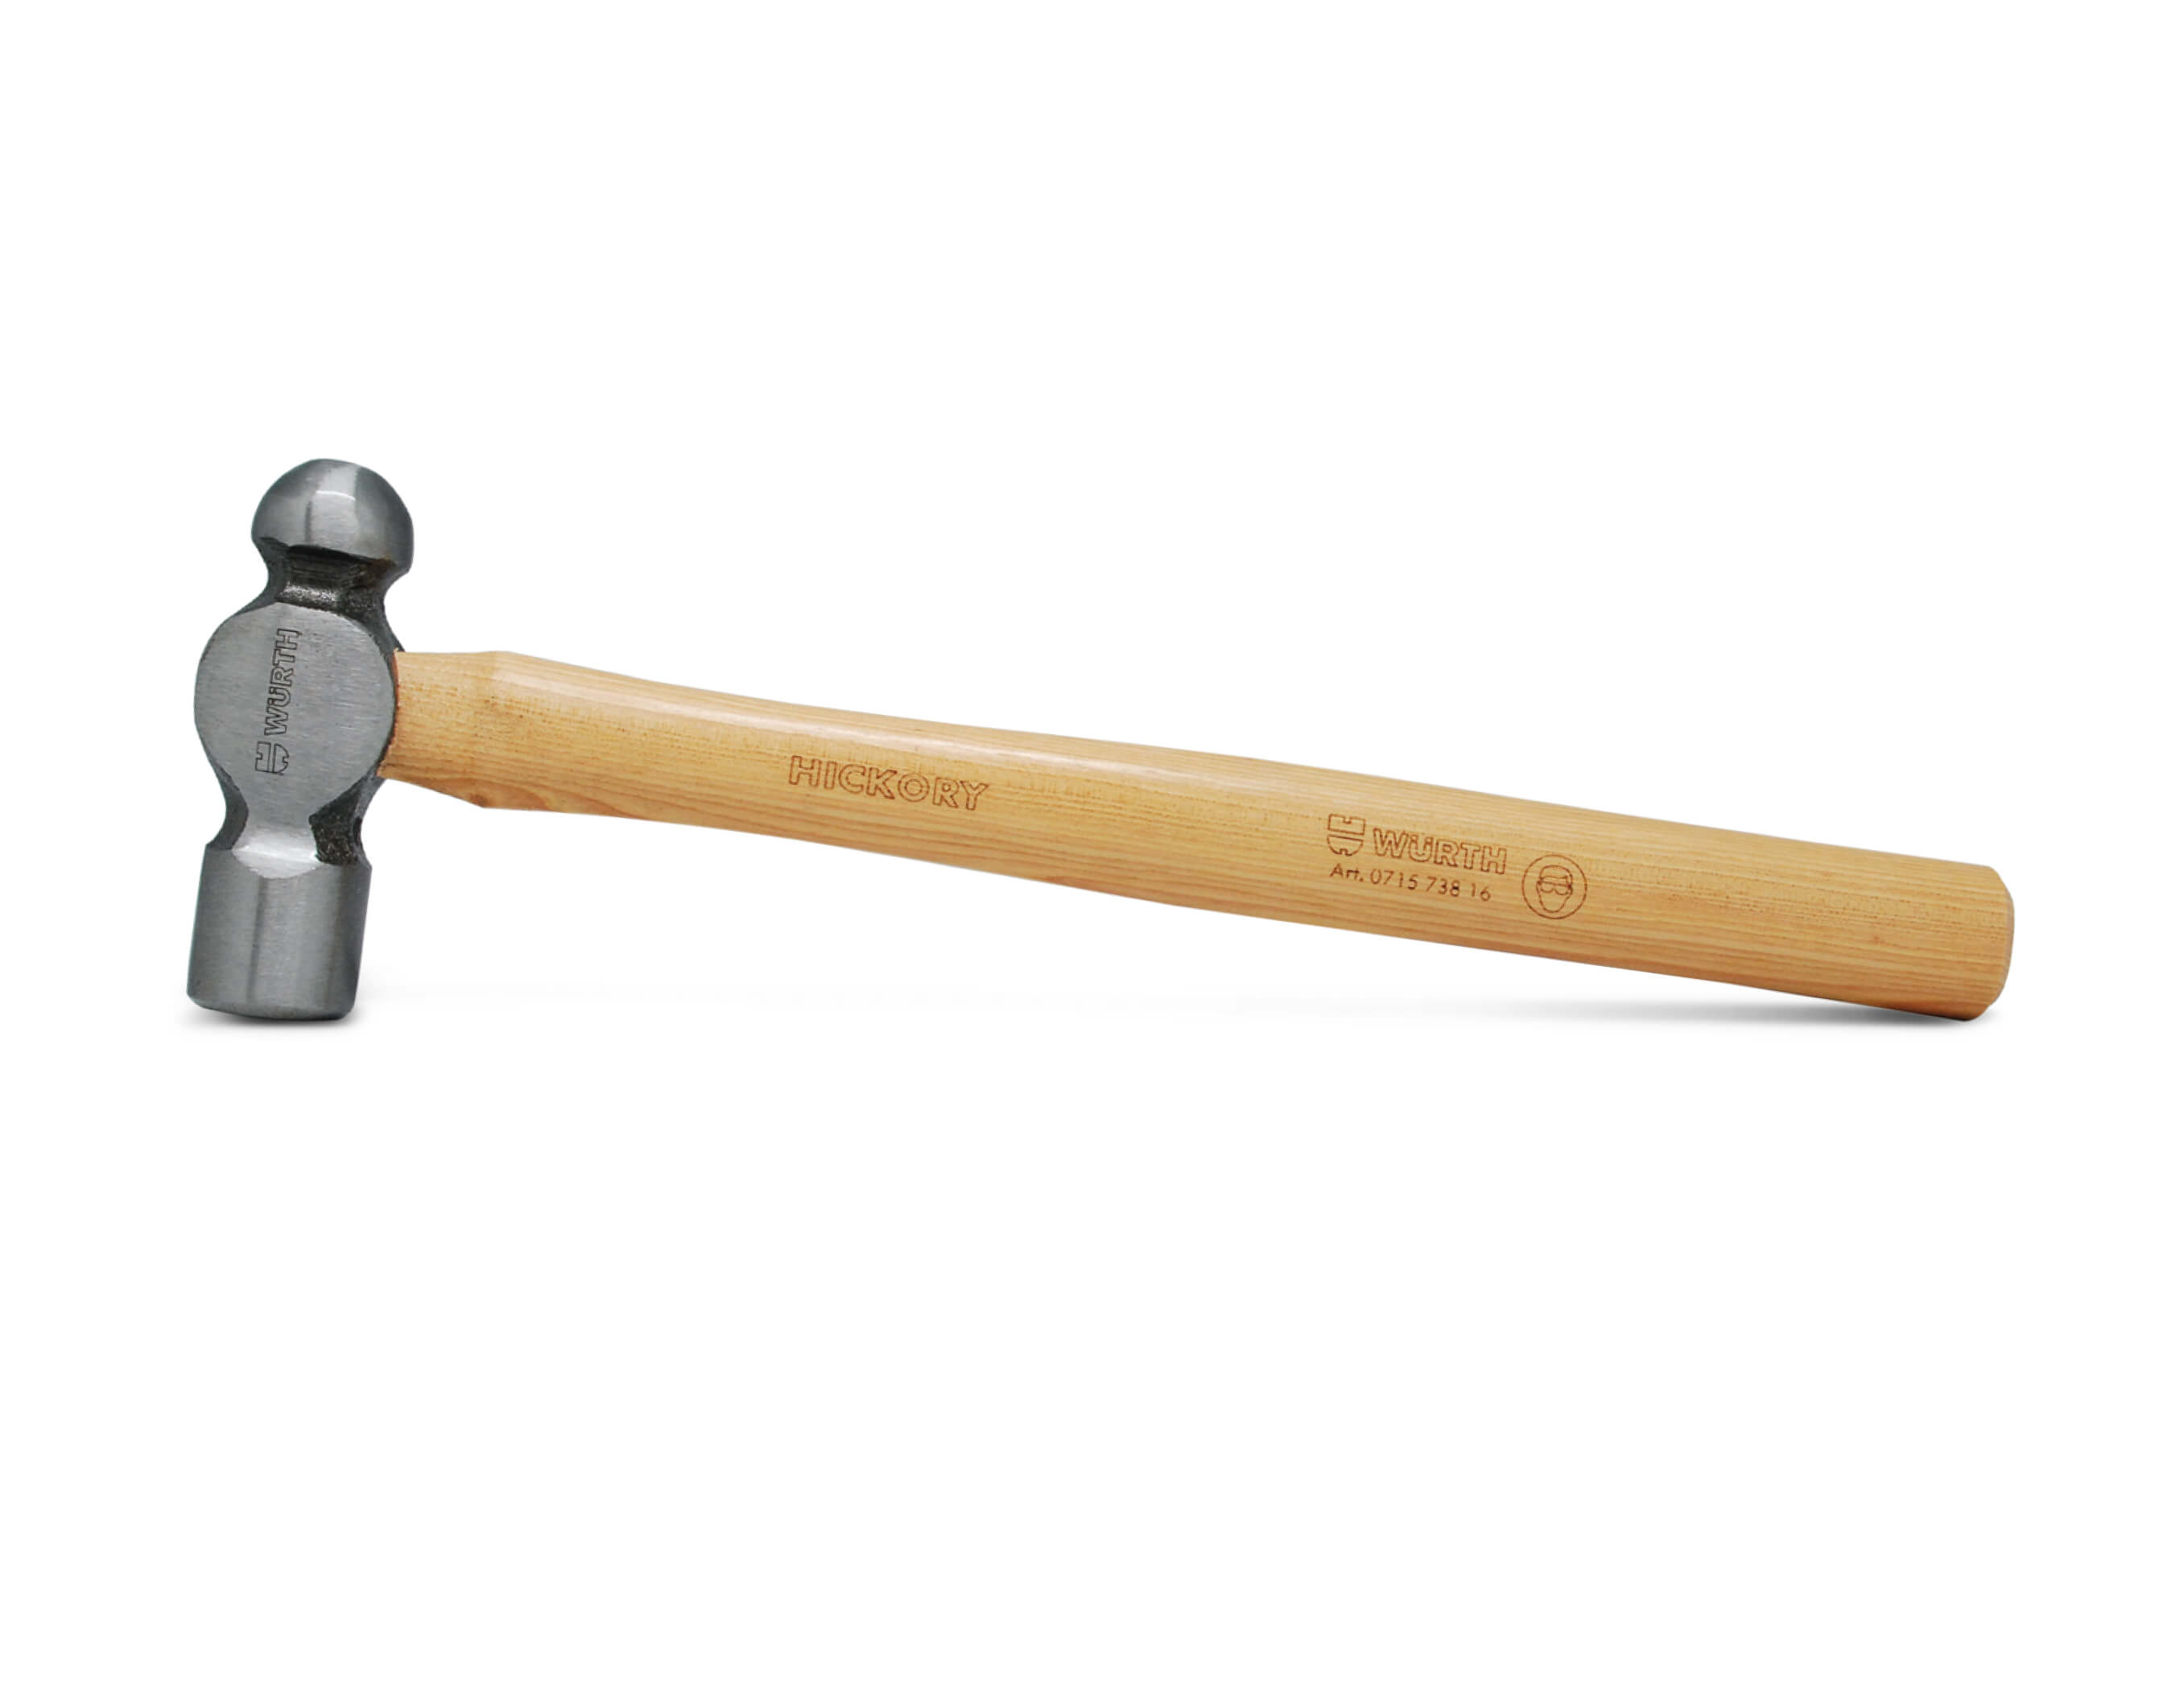 Ball Peen Hammer, 16oz, Hand Tools